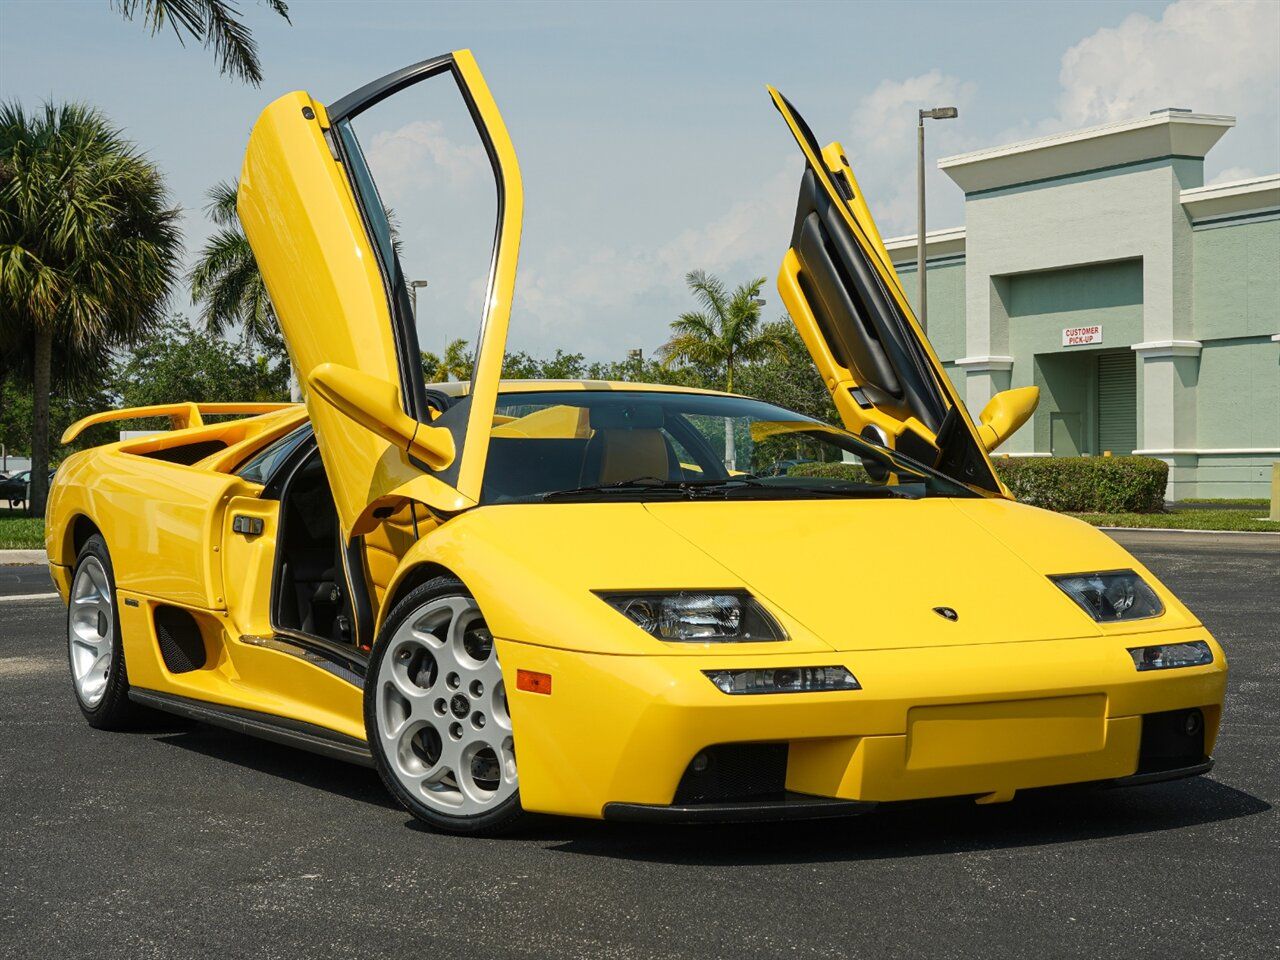 The Ideal Lamborghini Diablo Is for Sale